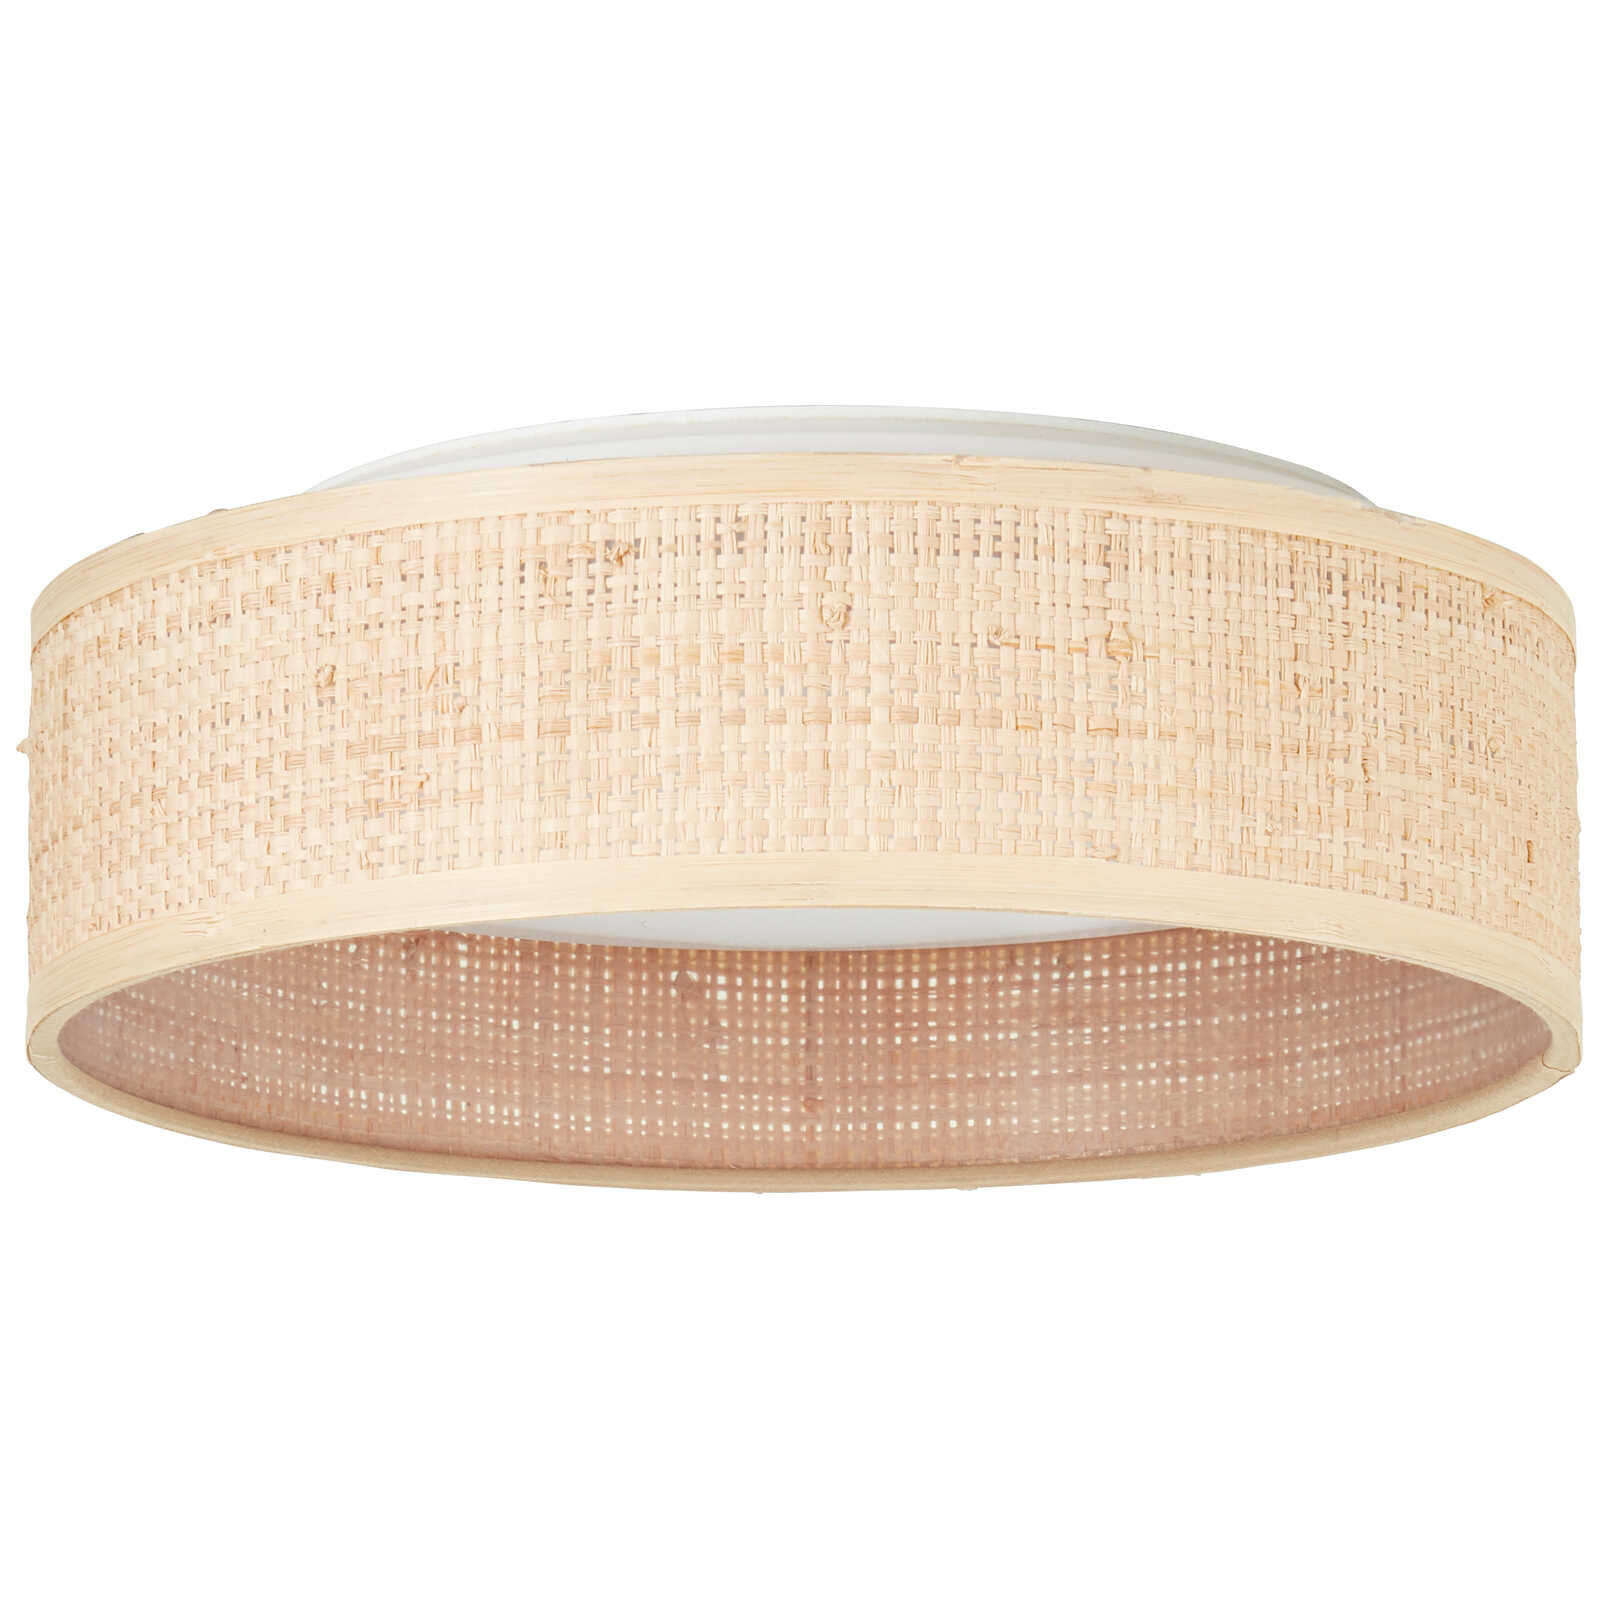             Wooden ceiling light - Yori - Brown
        